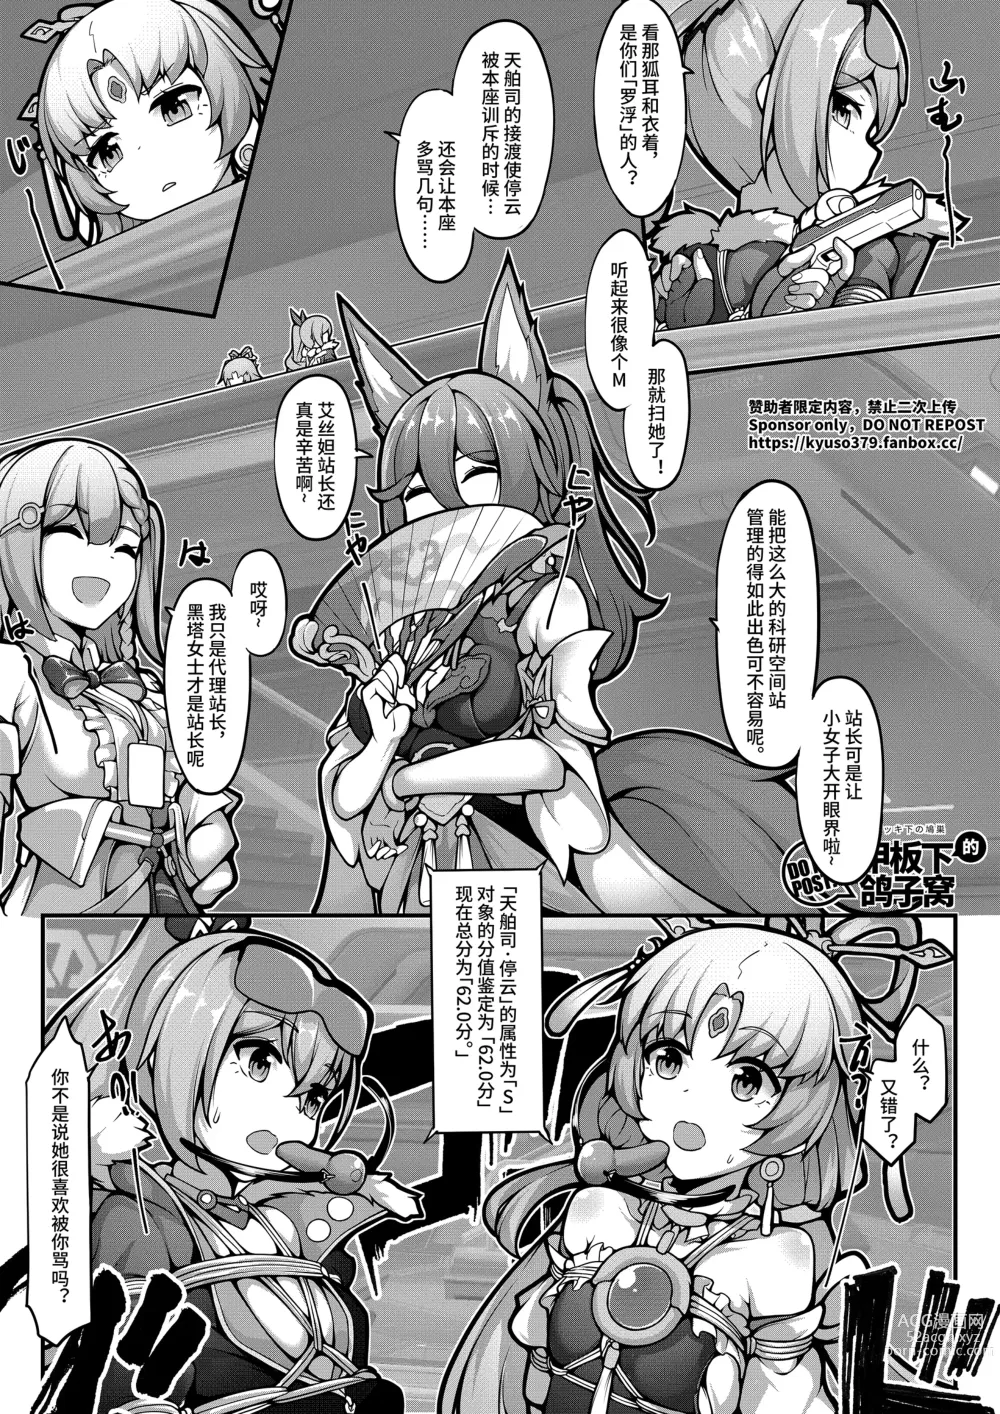 Page 9 of doujinshi Mutated gun